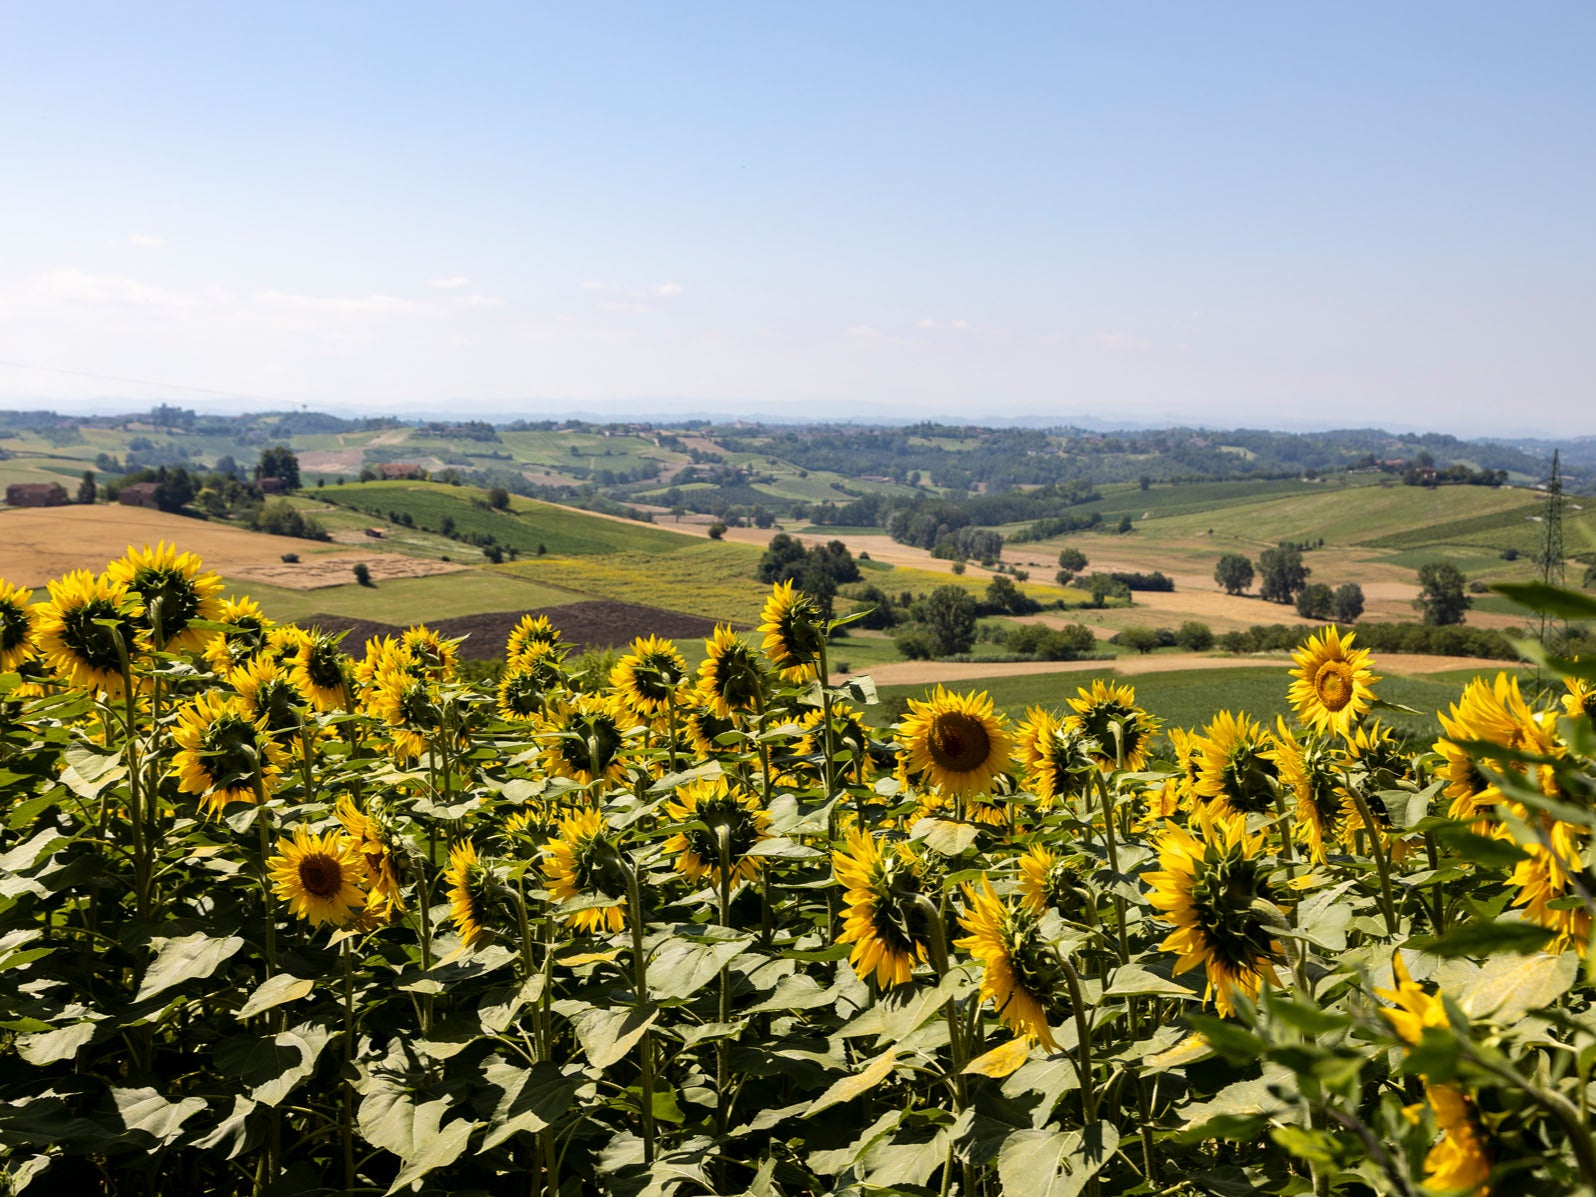 Monferrato offers unspoilt vistas in Italy’s Piedmont region